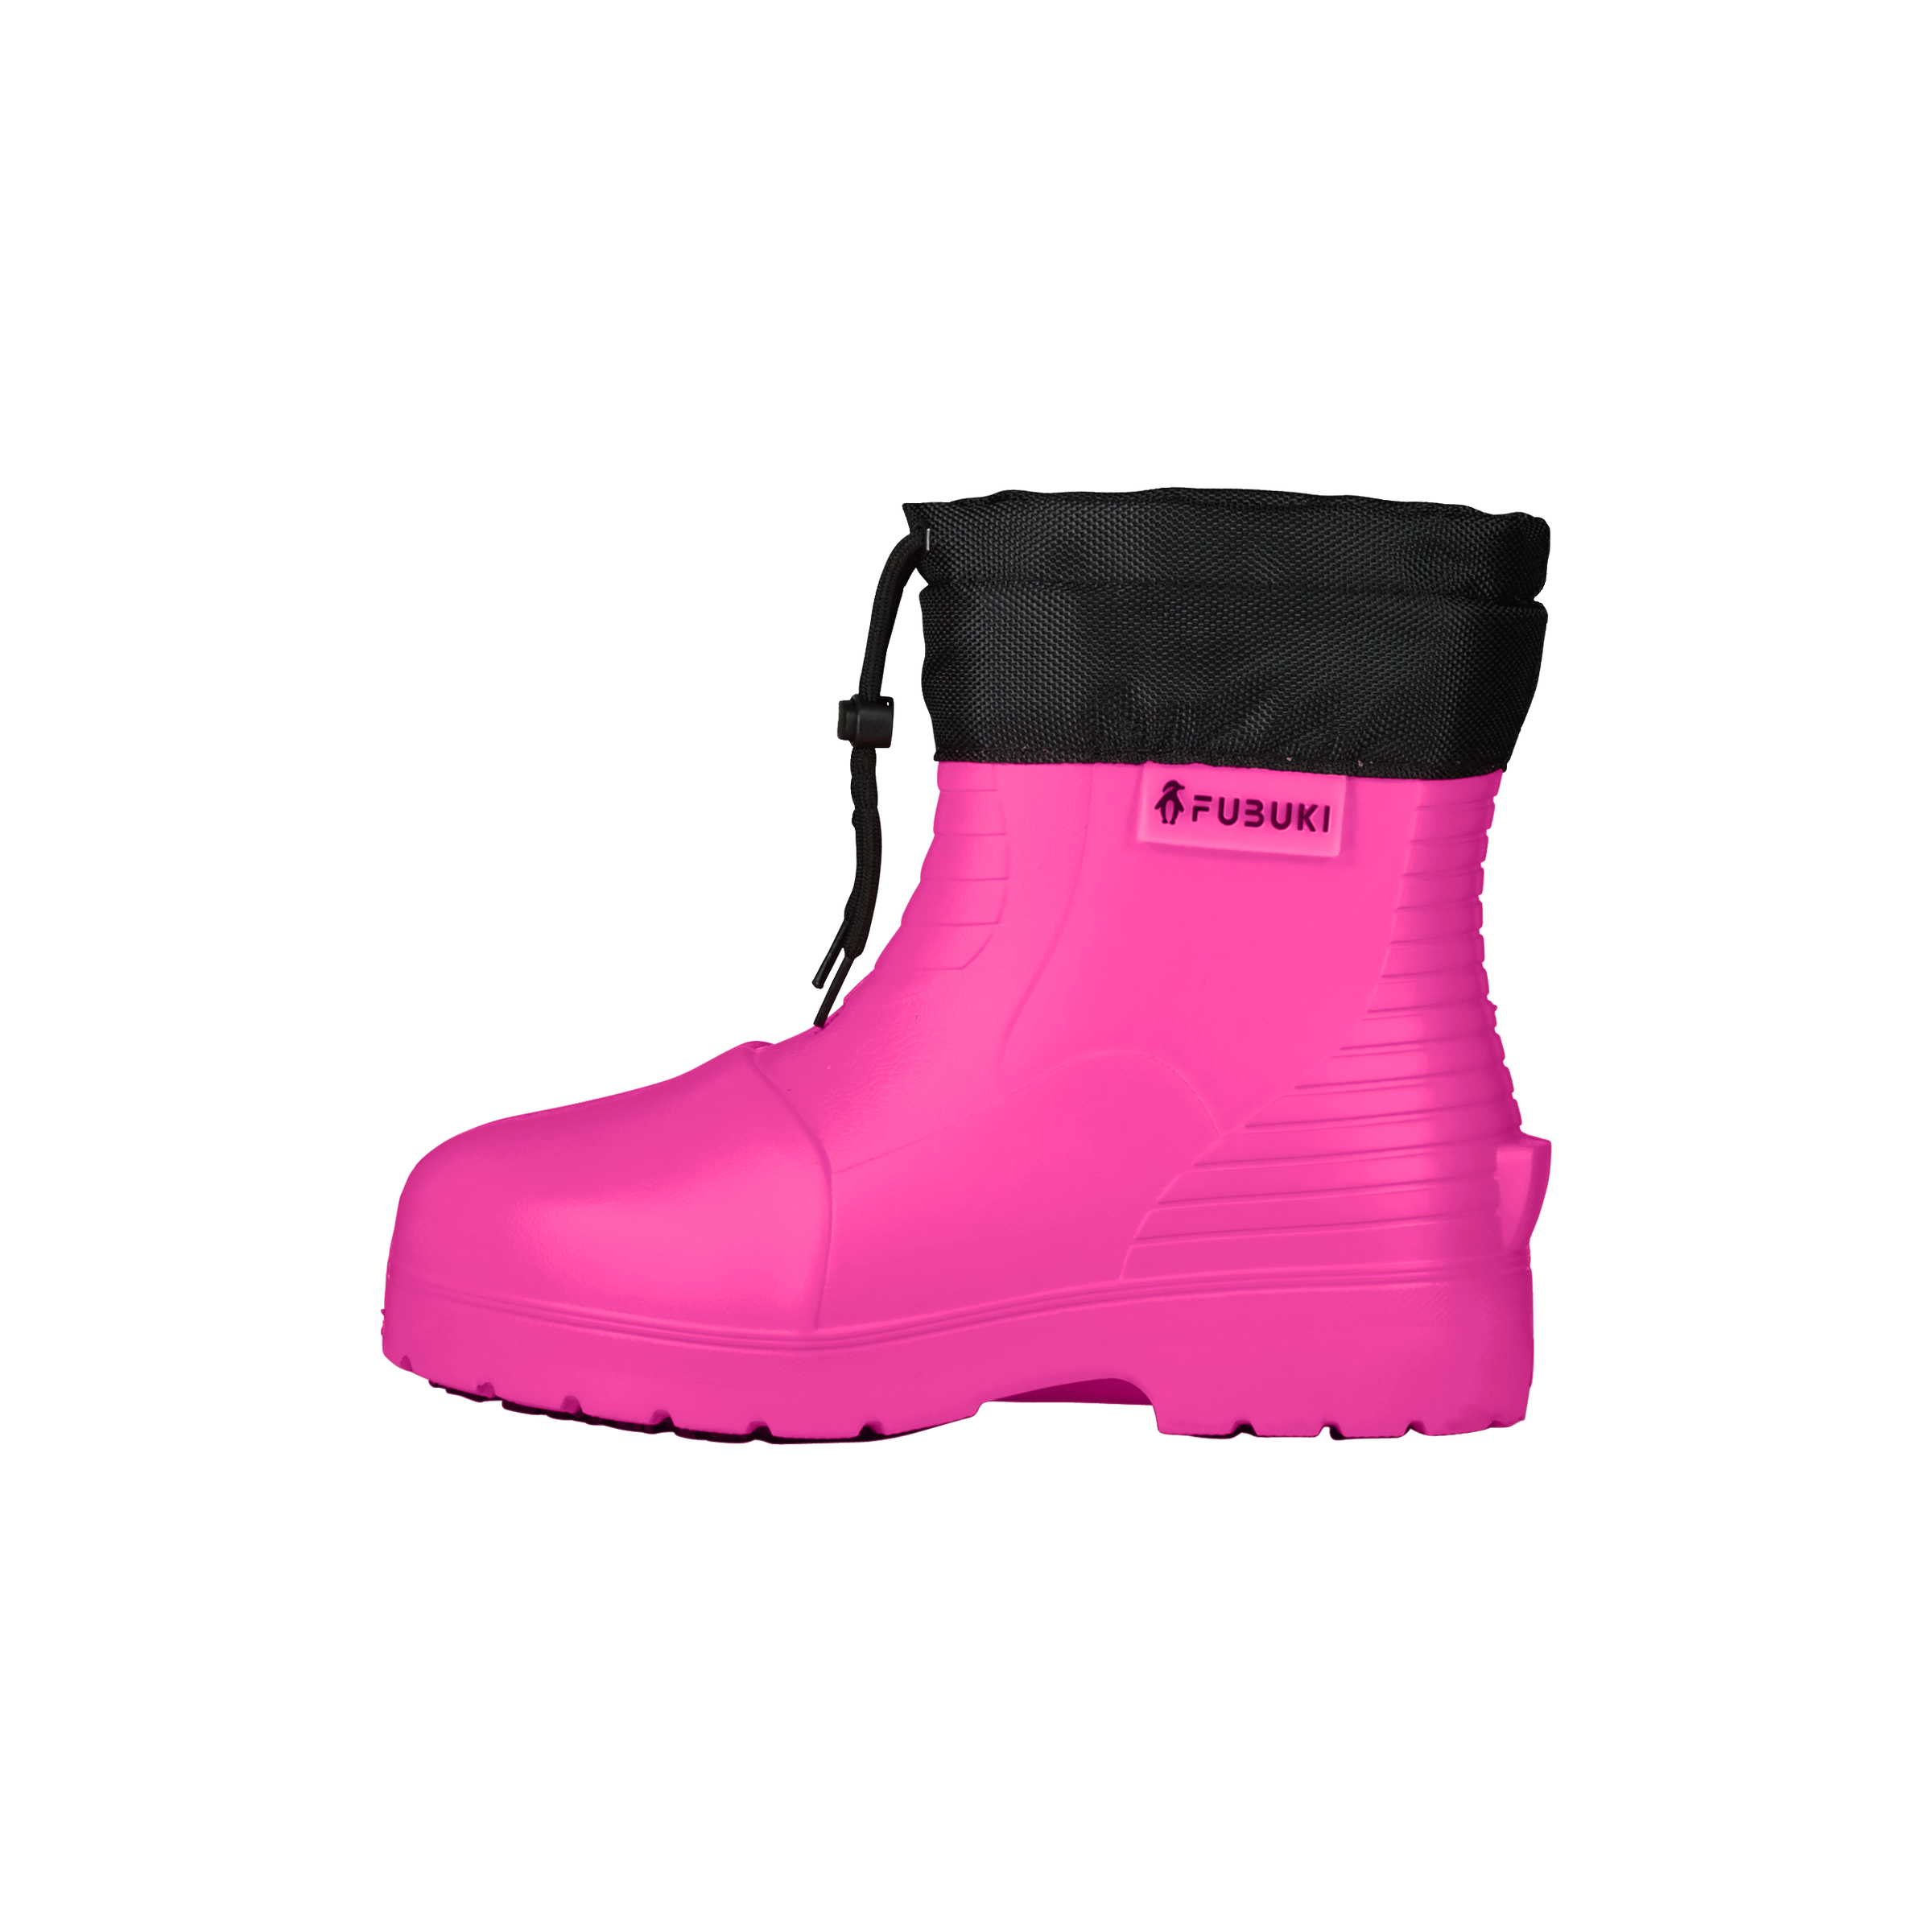 Fubuki boots – The Snow Department